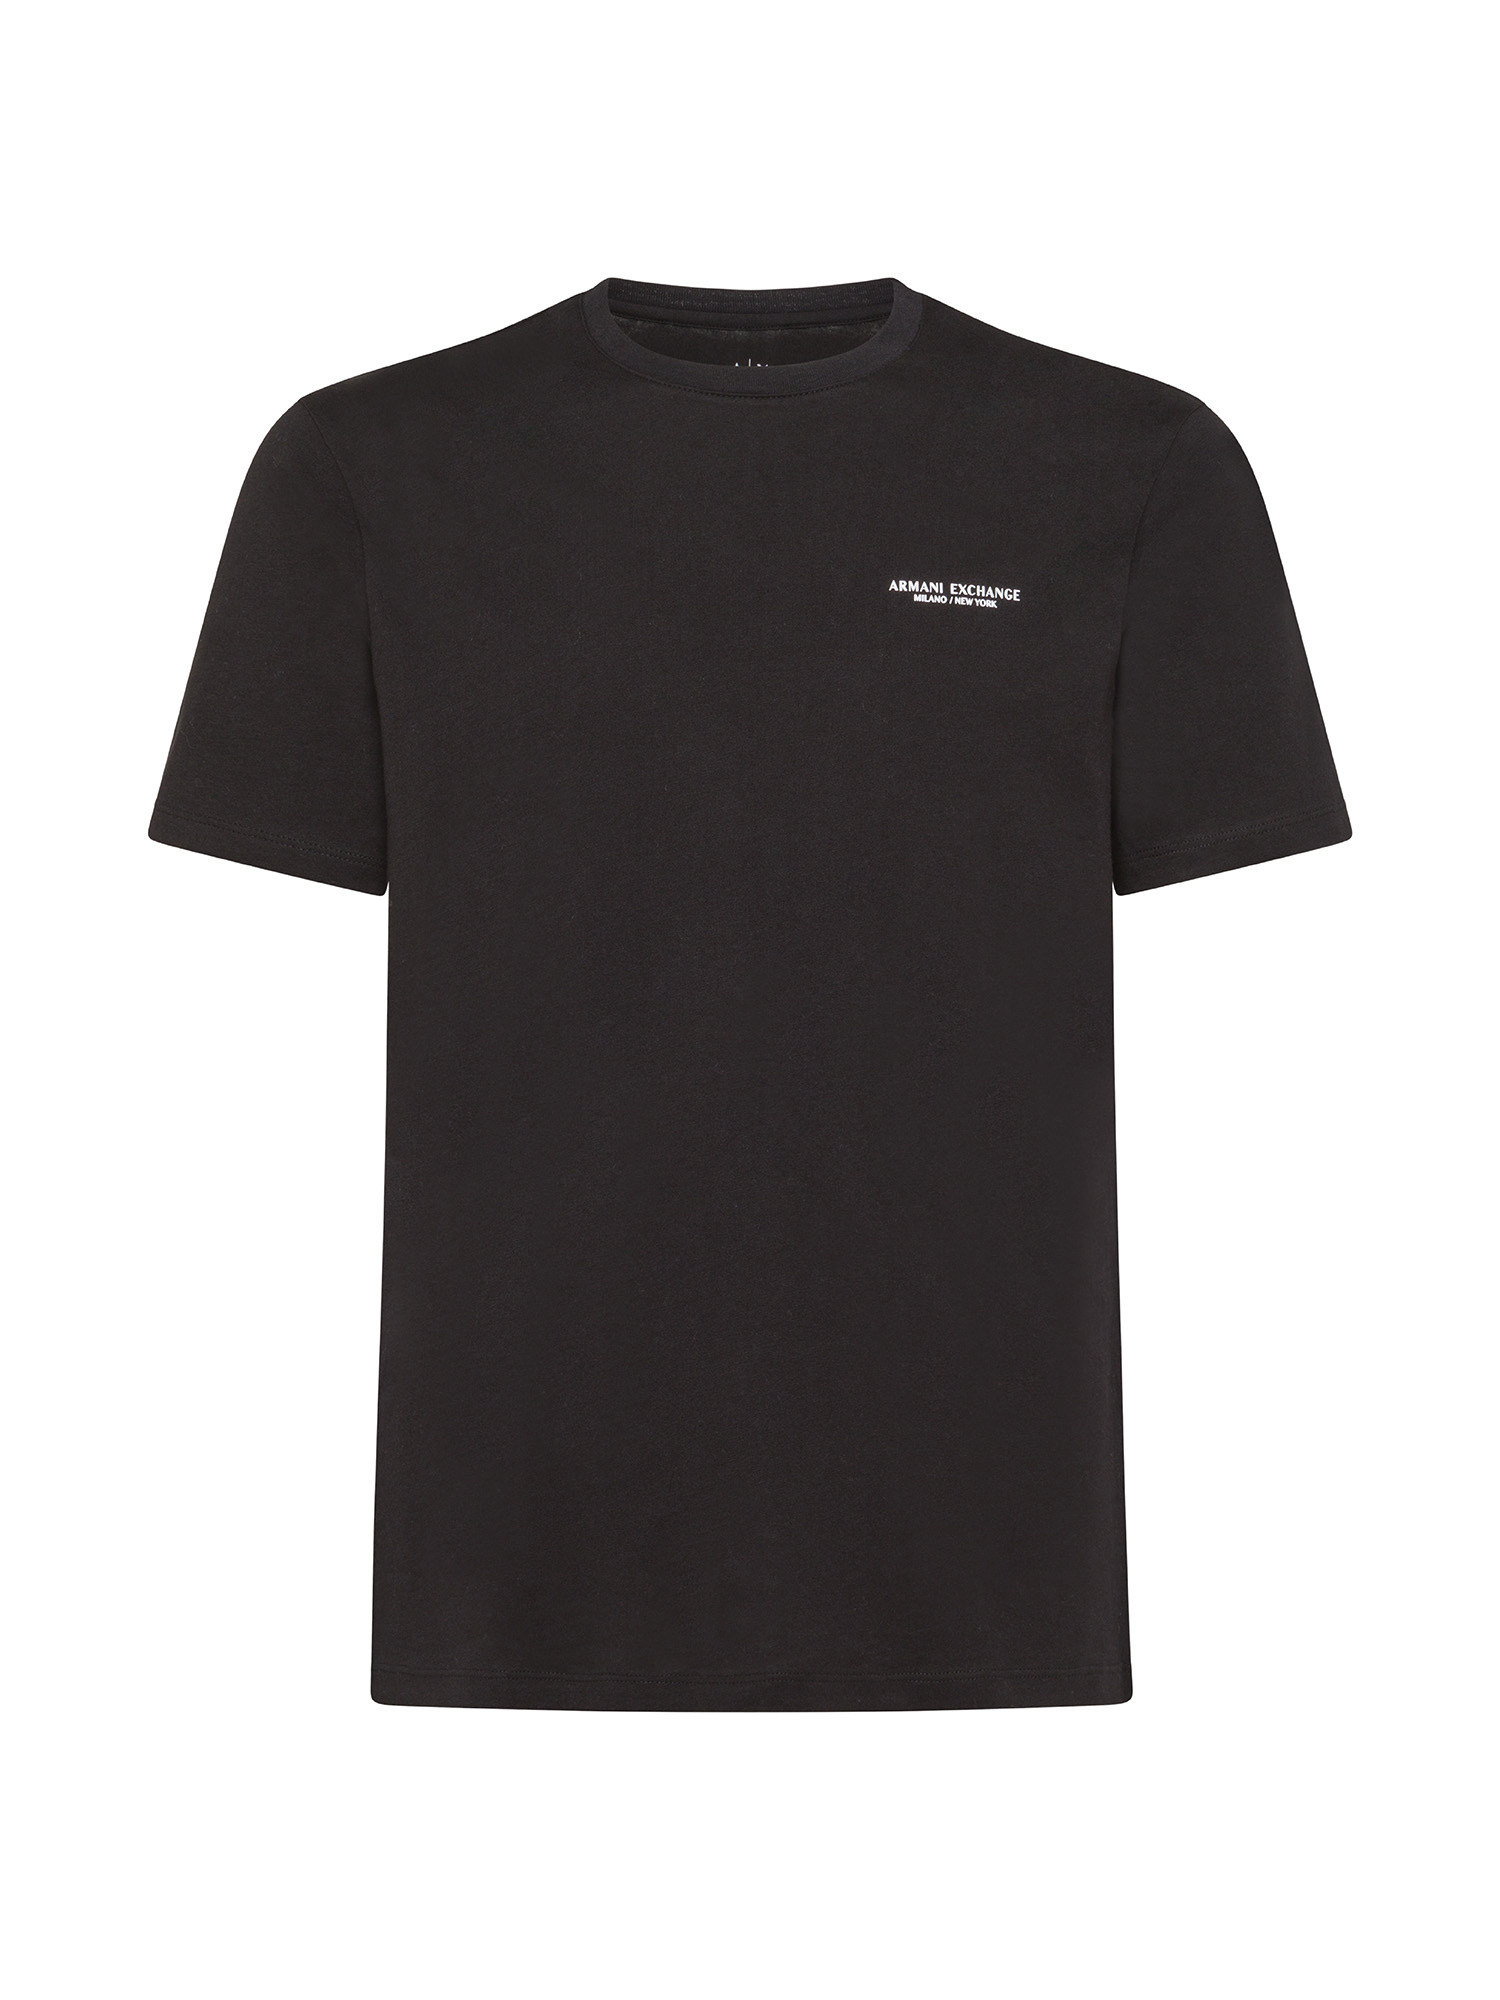 Armani Exchange - T-shirt girocollo con logo, Nero, large